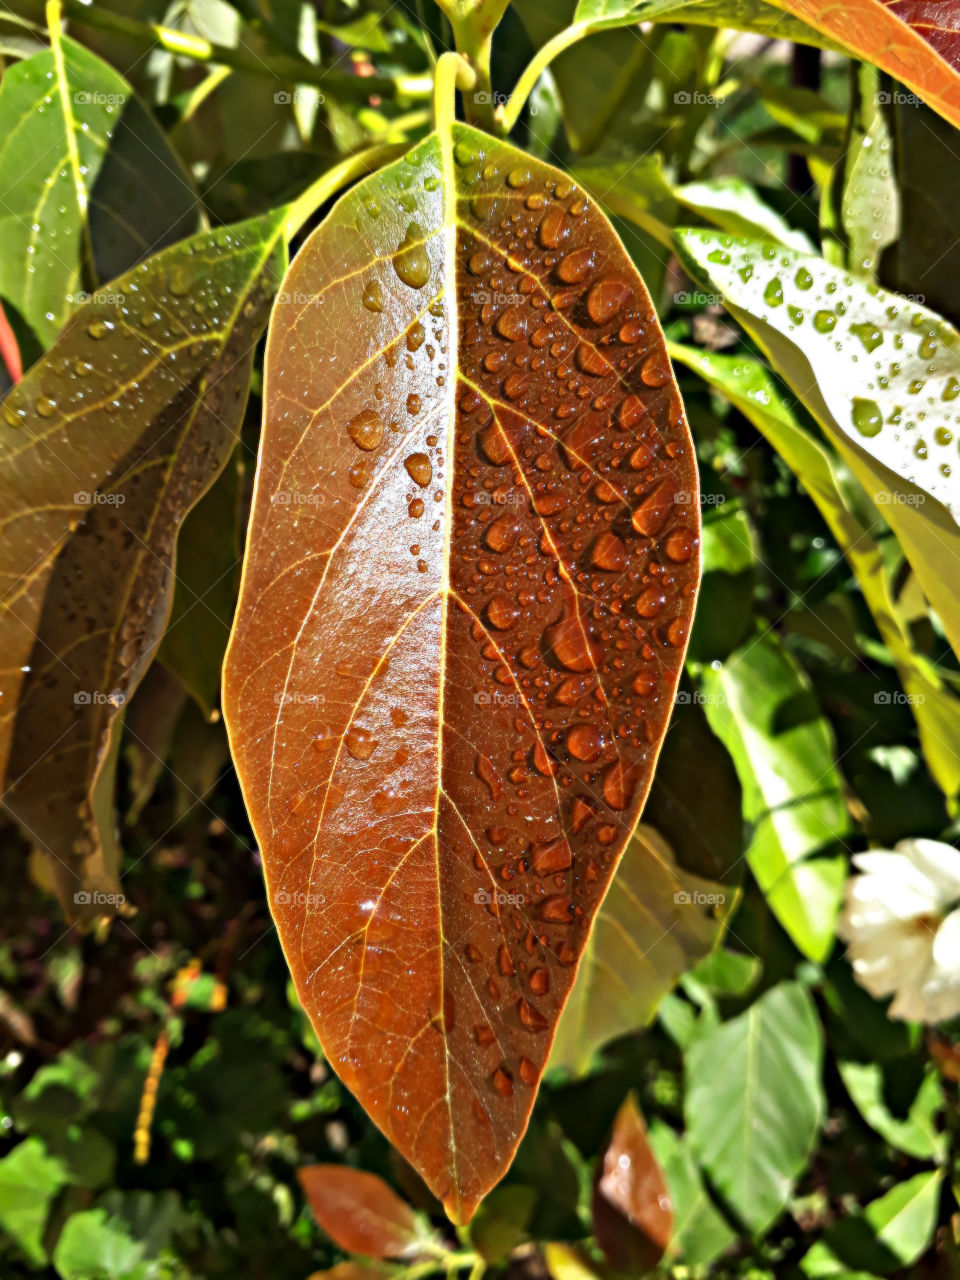 Raindrops in Leaf